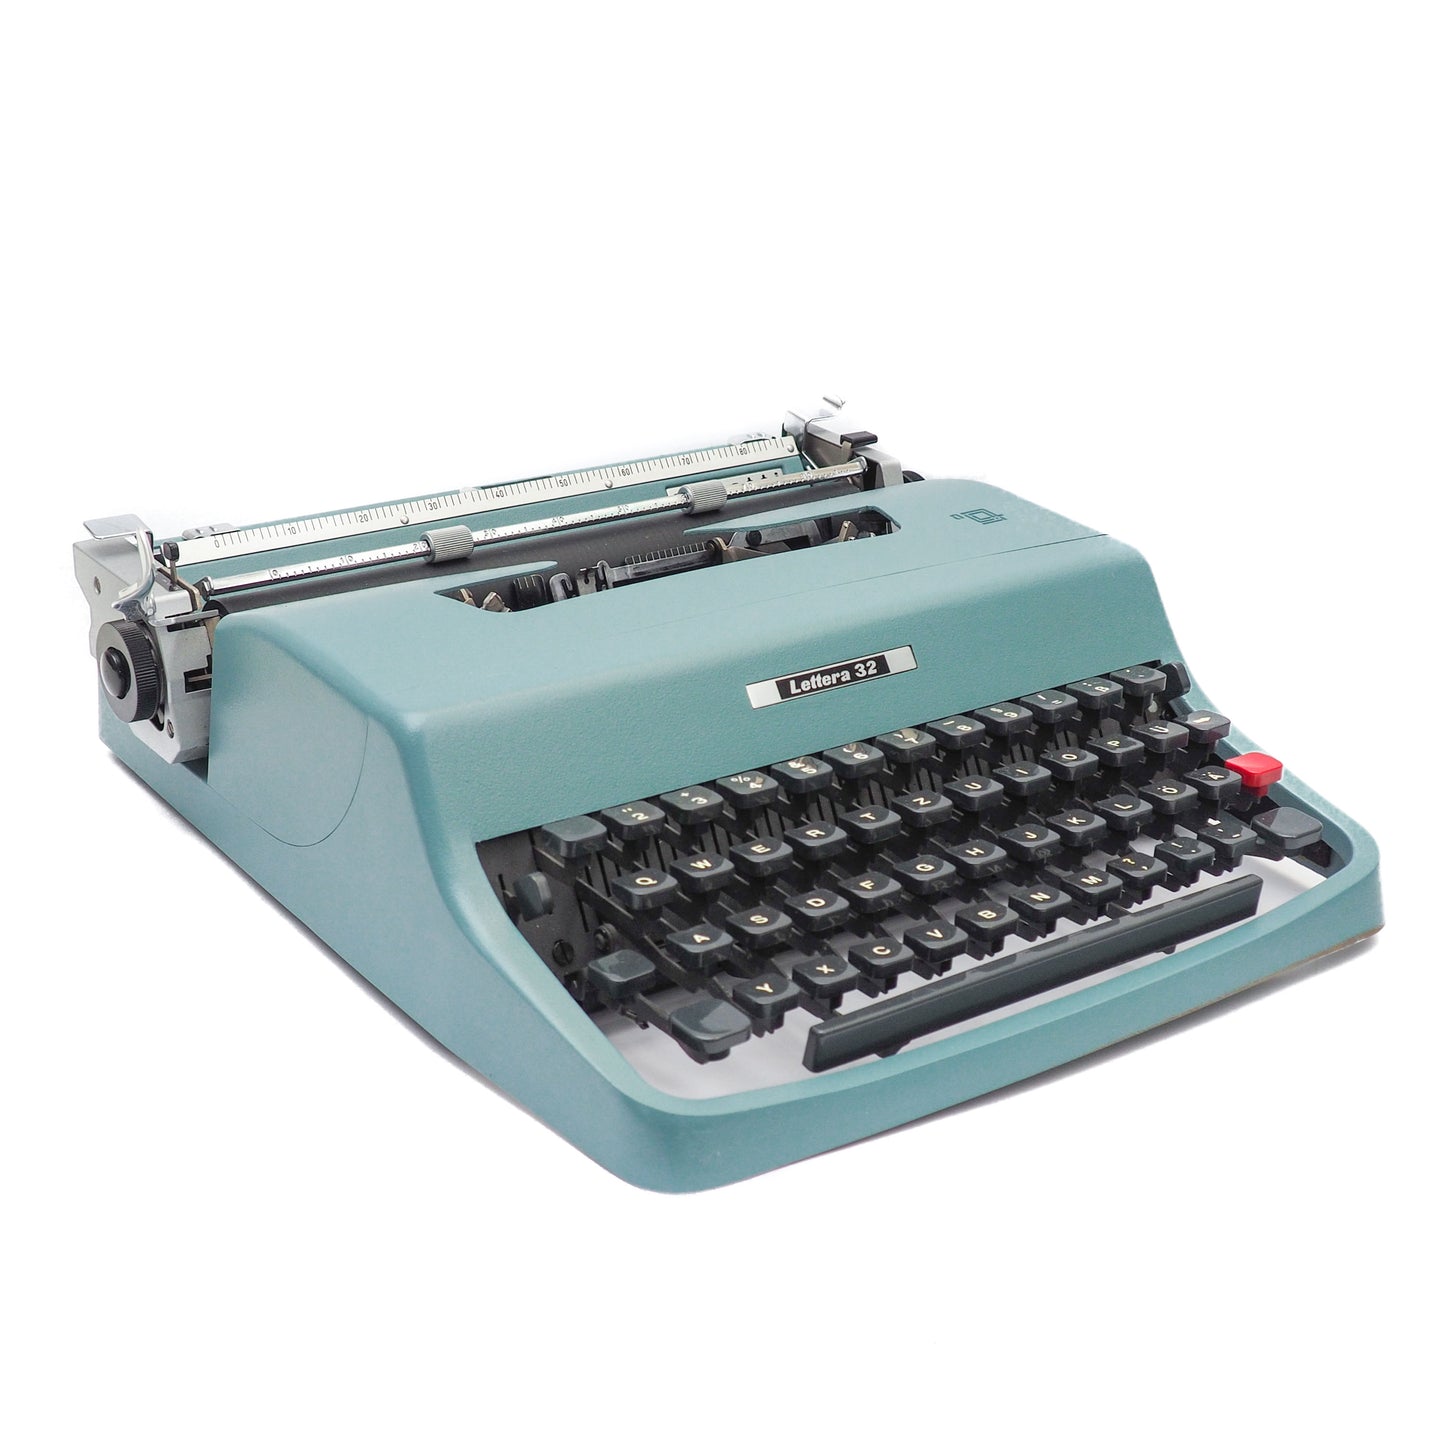 Schreibmaschine Olivetti Lettera 32